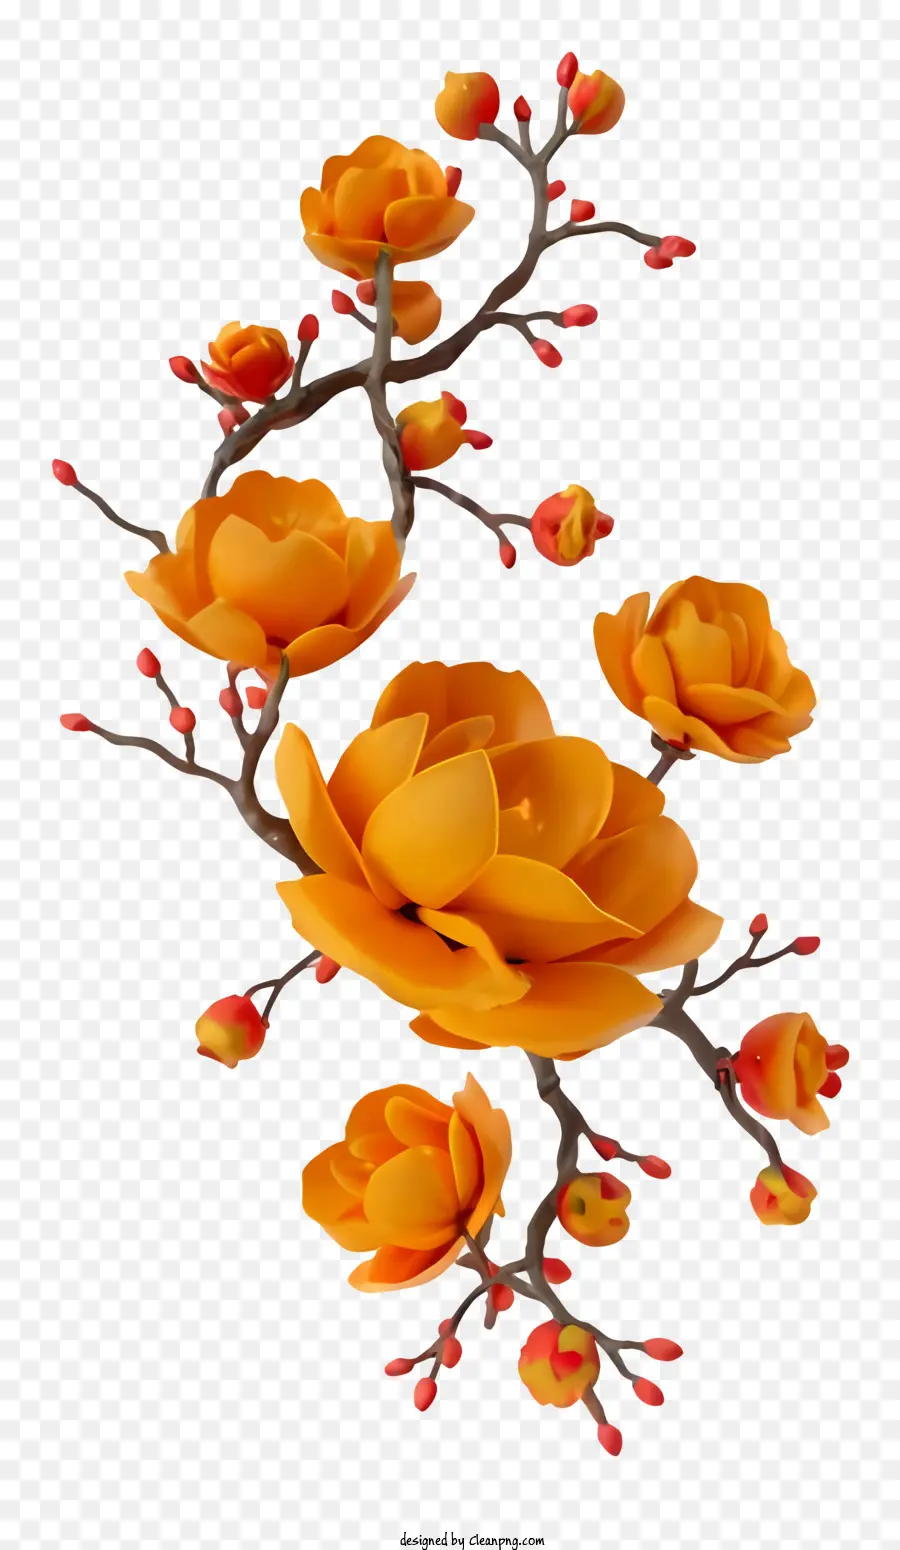 Cartoon Orange Flowers Bouquet Black Sfondo petali - Bouquet di fiori d'arancia su sfondo nero semplice